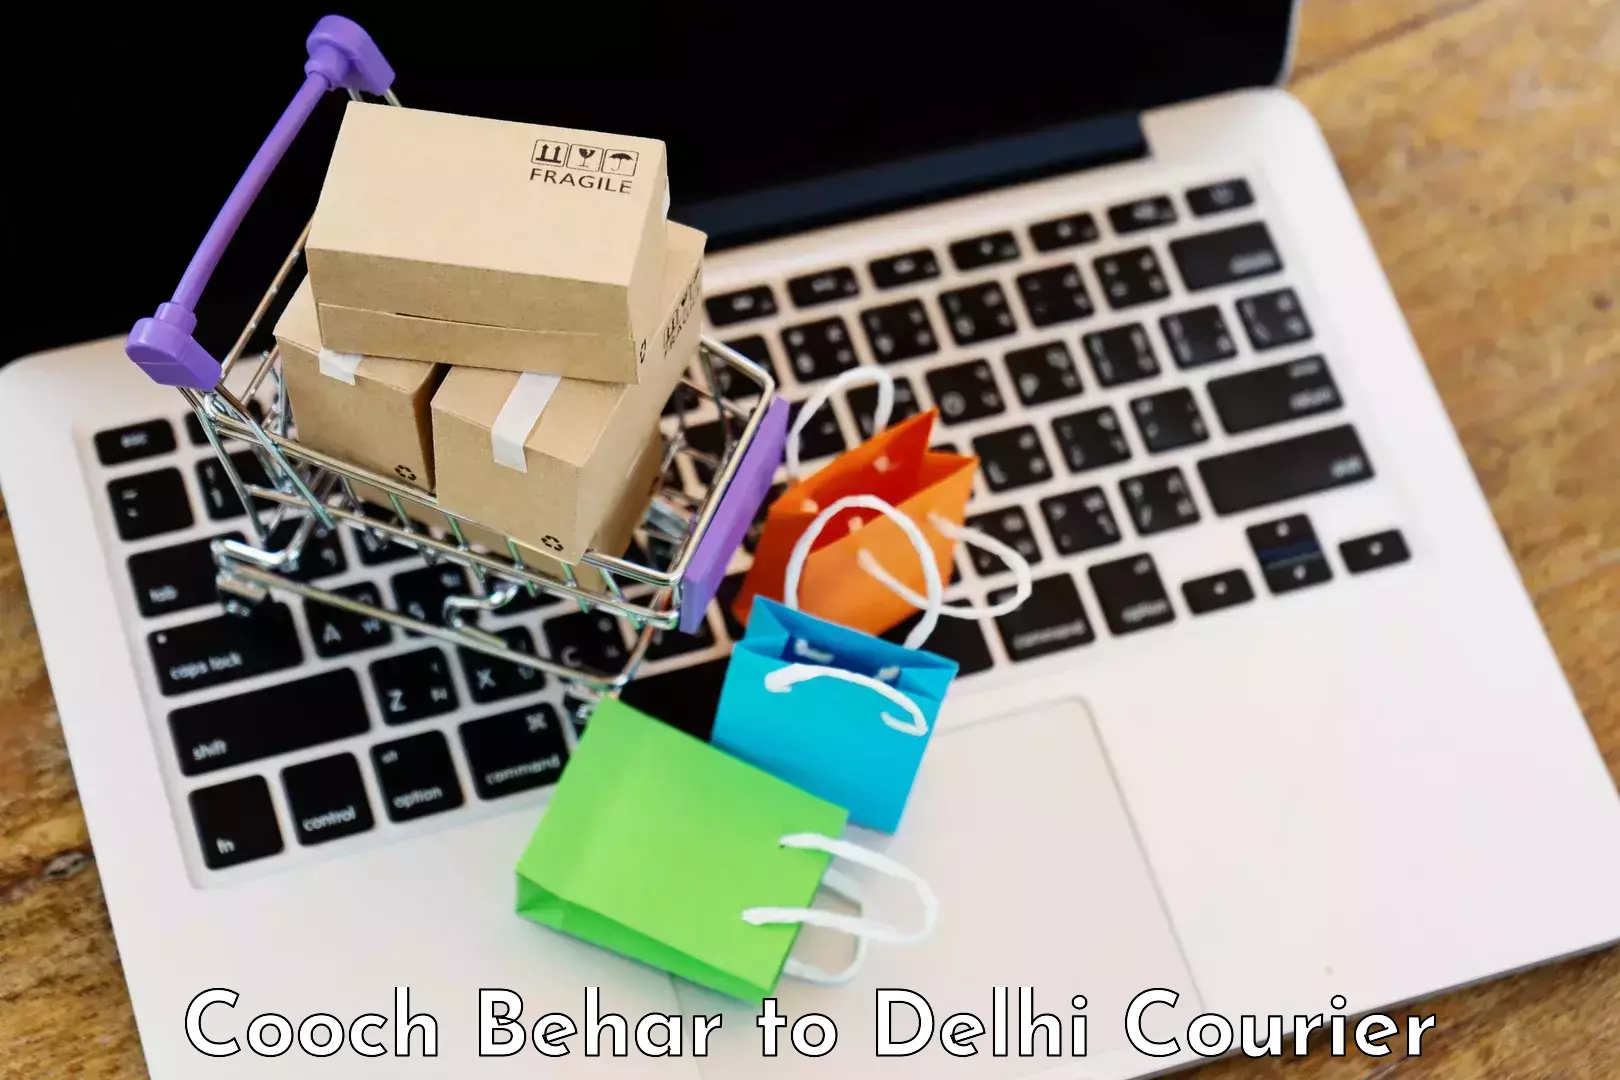 Efficient moving company Cooch Behar to Delhi